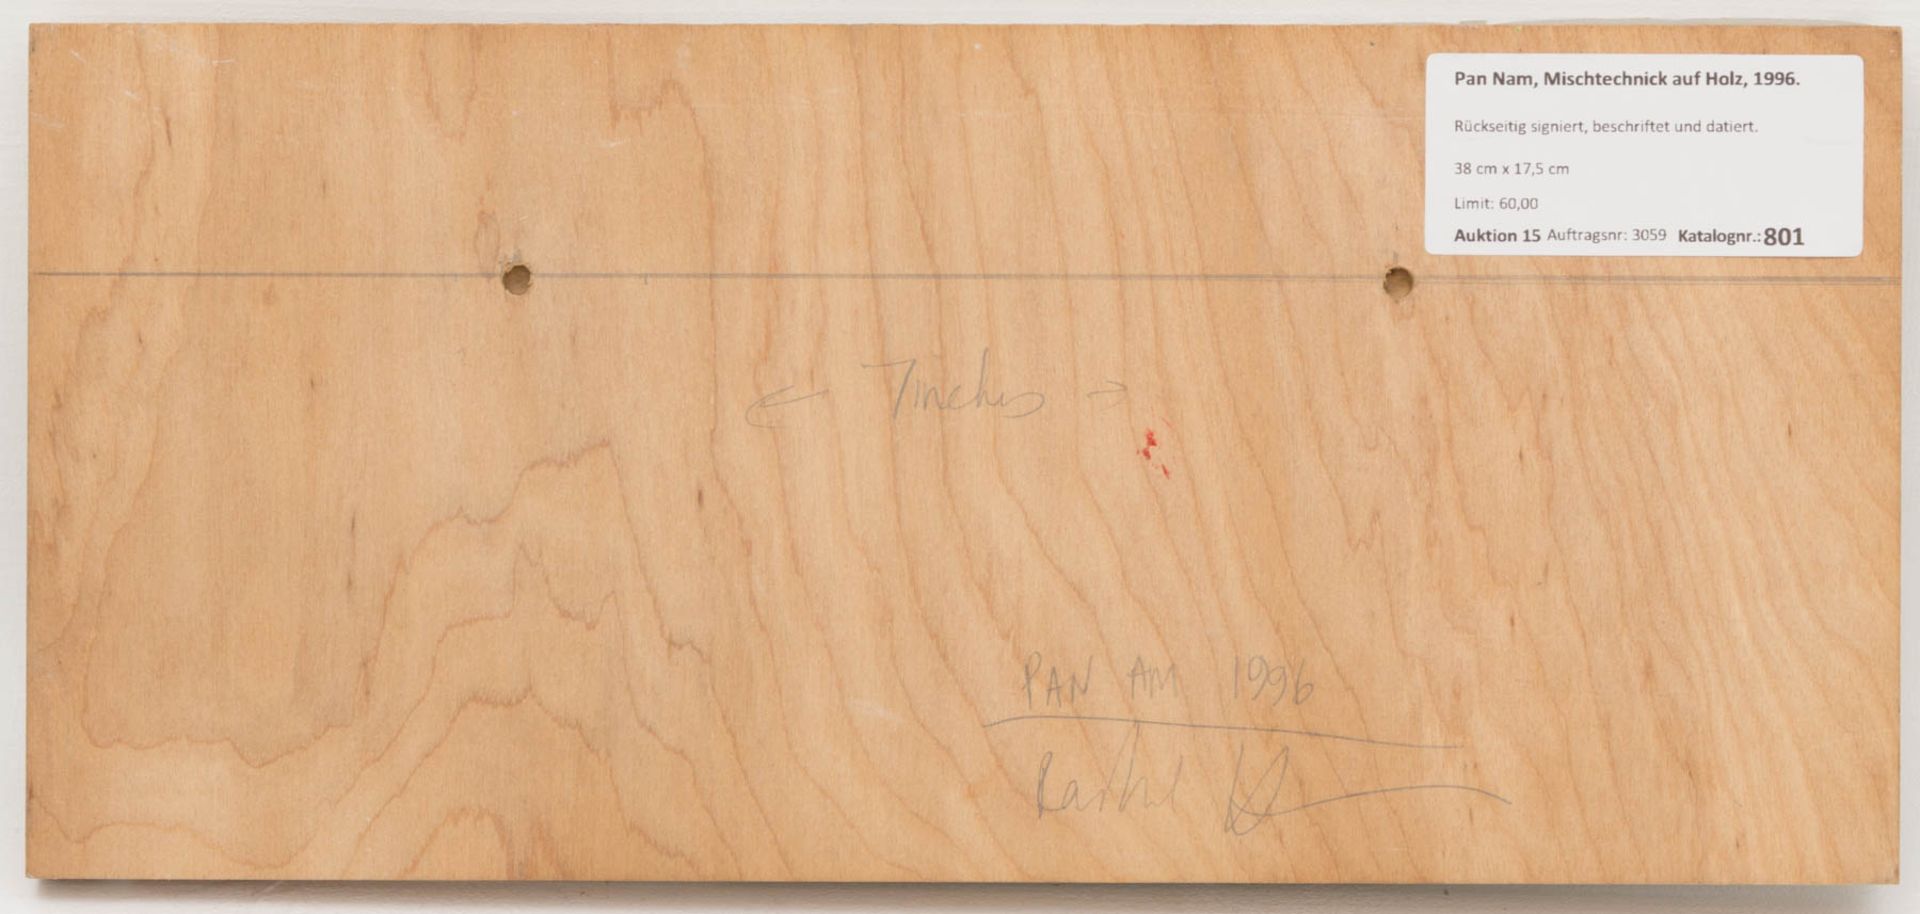 Pan Nam, Mischtechnick auf Holz, 1996.Rückseitig signiert, beschriftet und datiert. 38 cm x 17,5 cm - Image 3 of 3